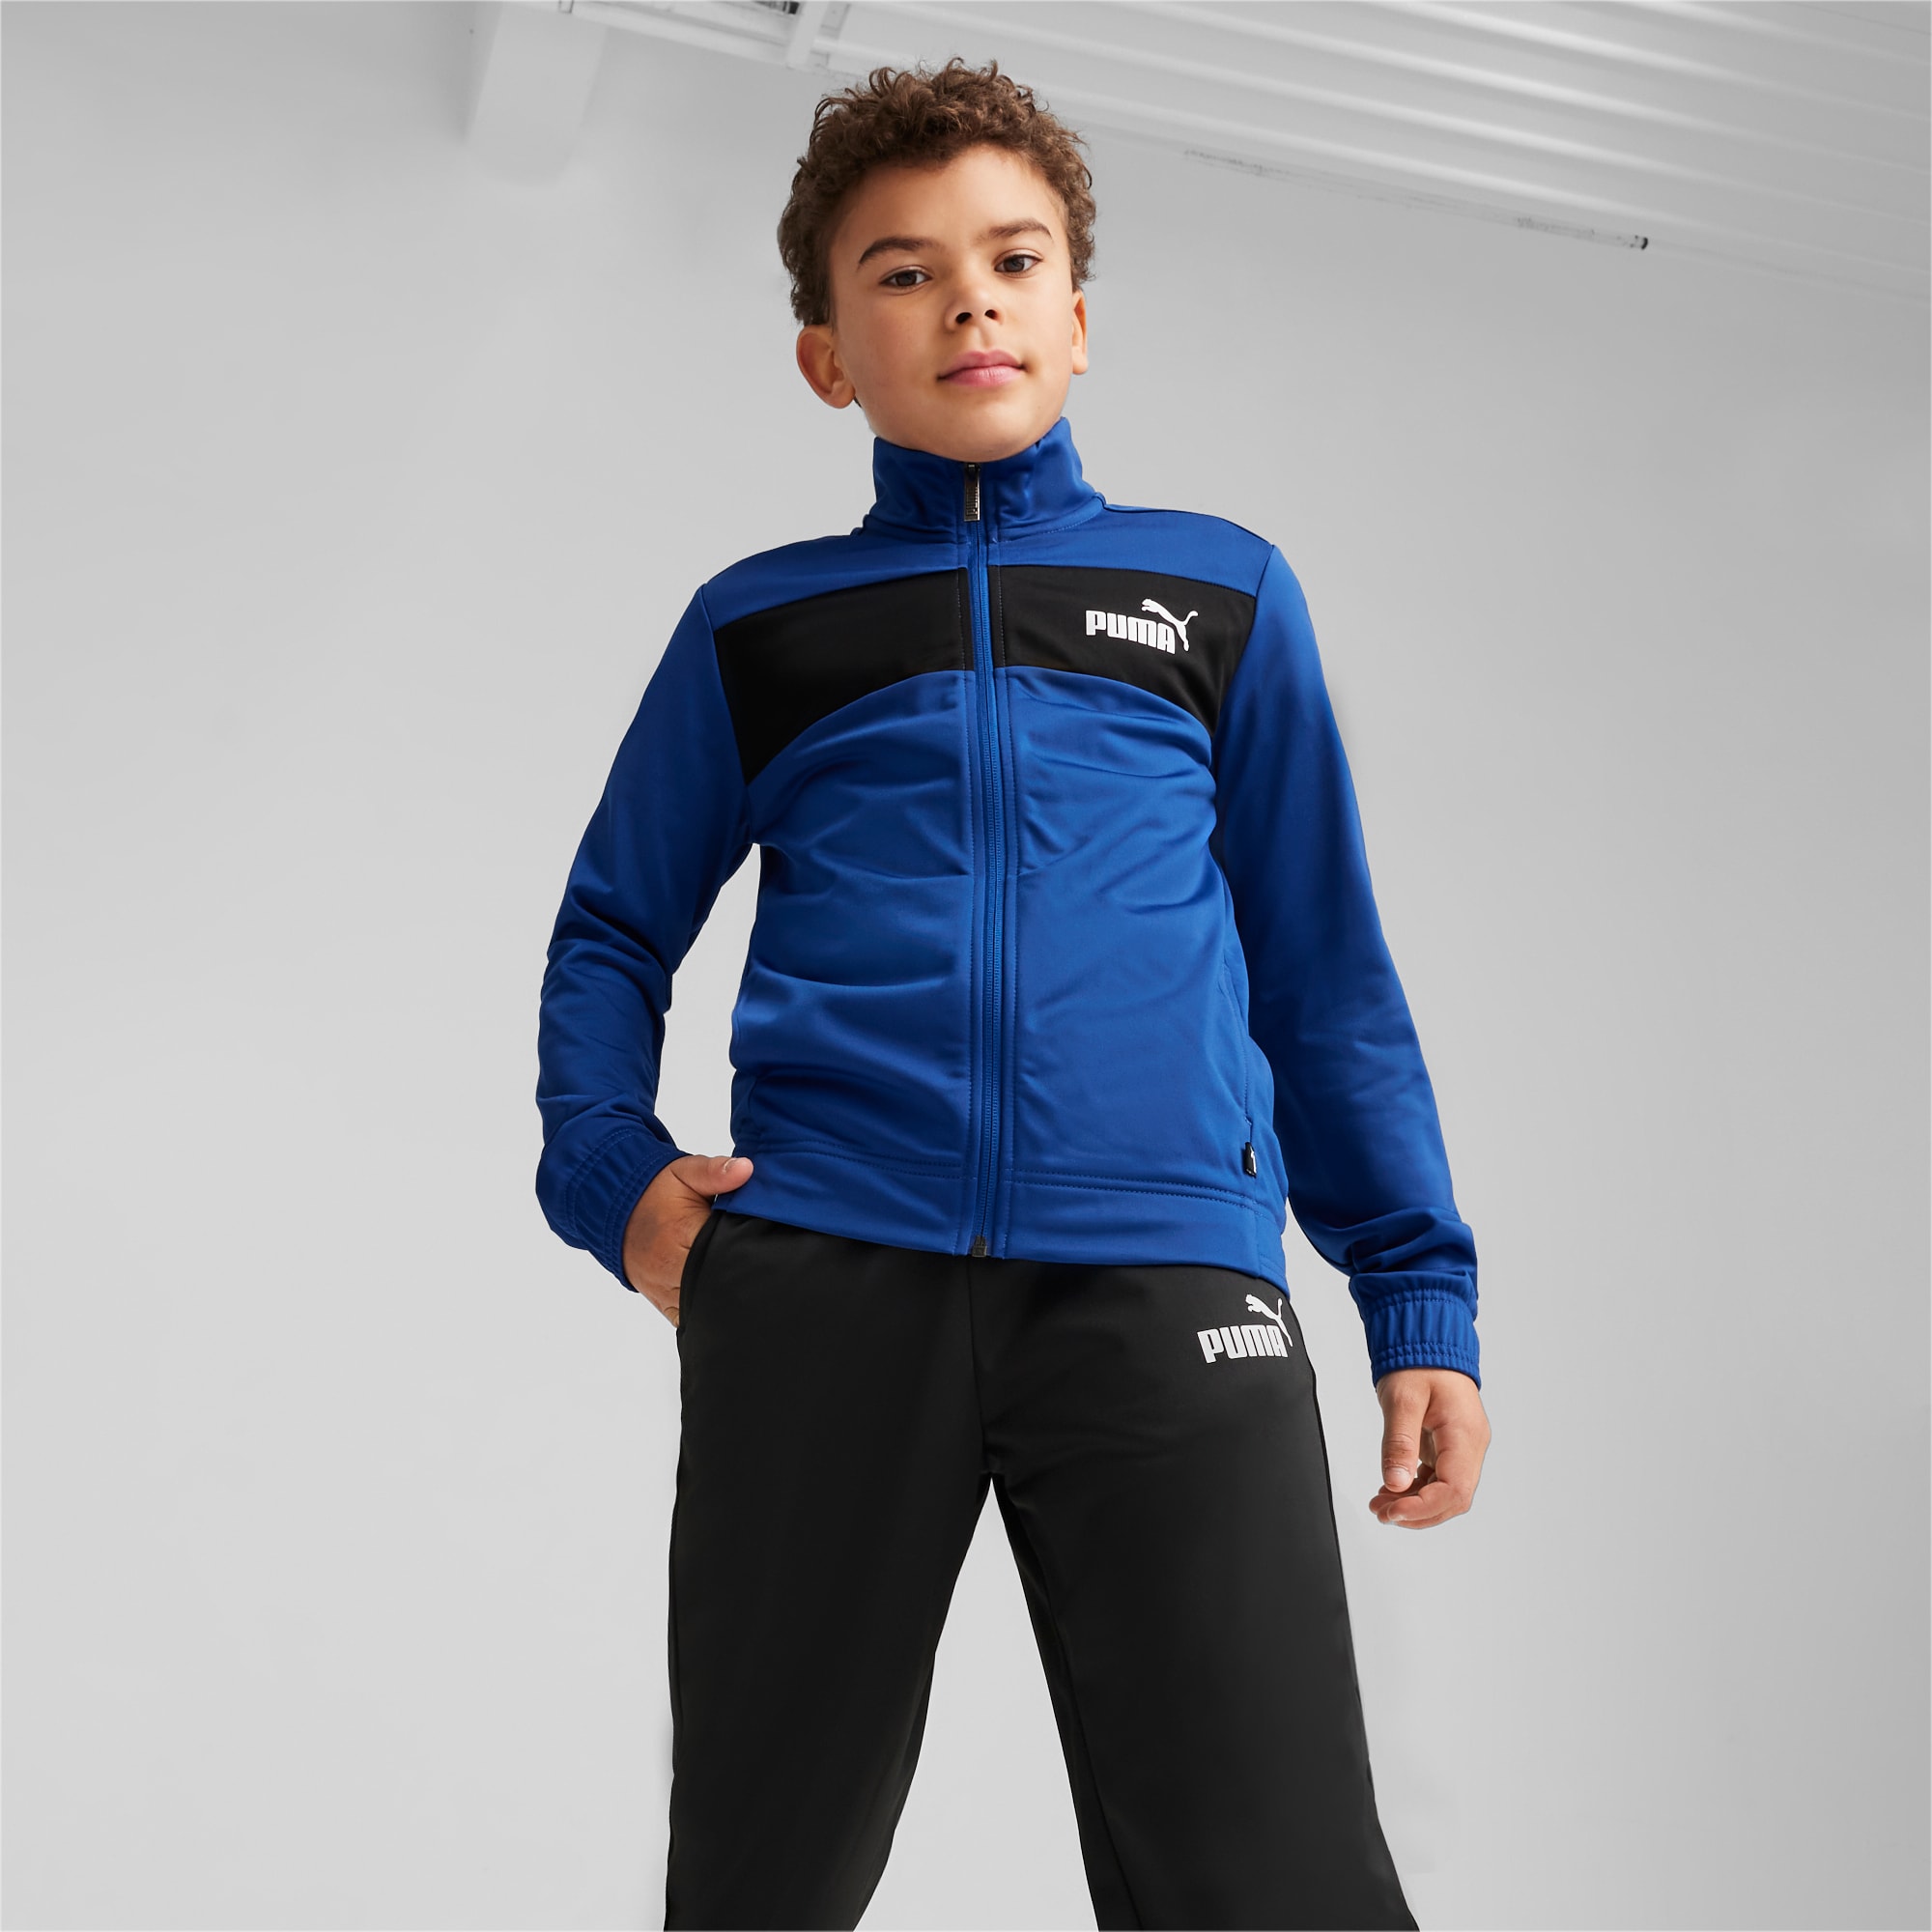 PUMA Jugend-Trainingsanzug Aus Polyester Für Kinder, Blau, Größe: 128, Kleidung